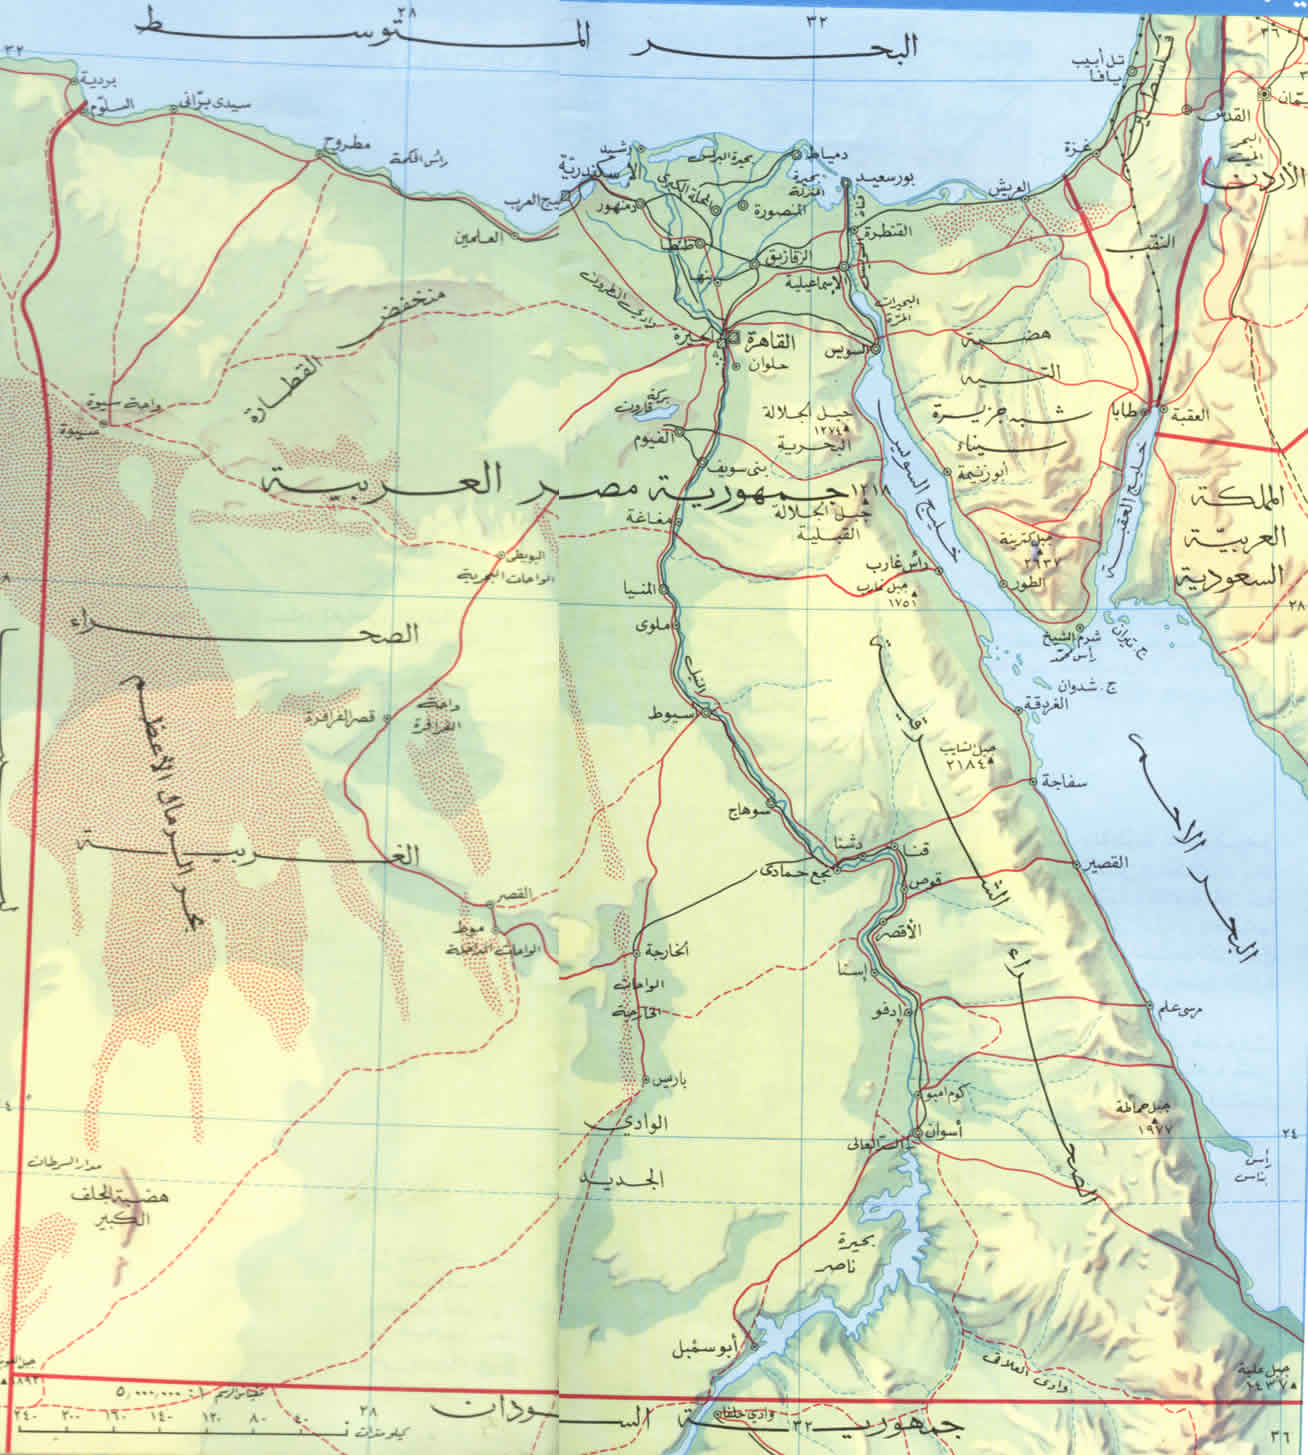 Map of Egypt in Arabic.